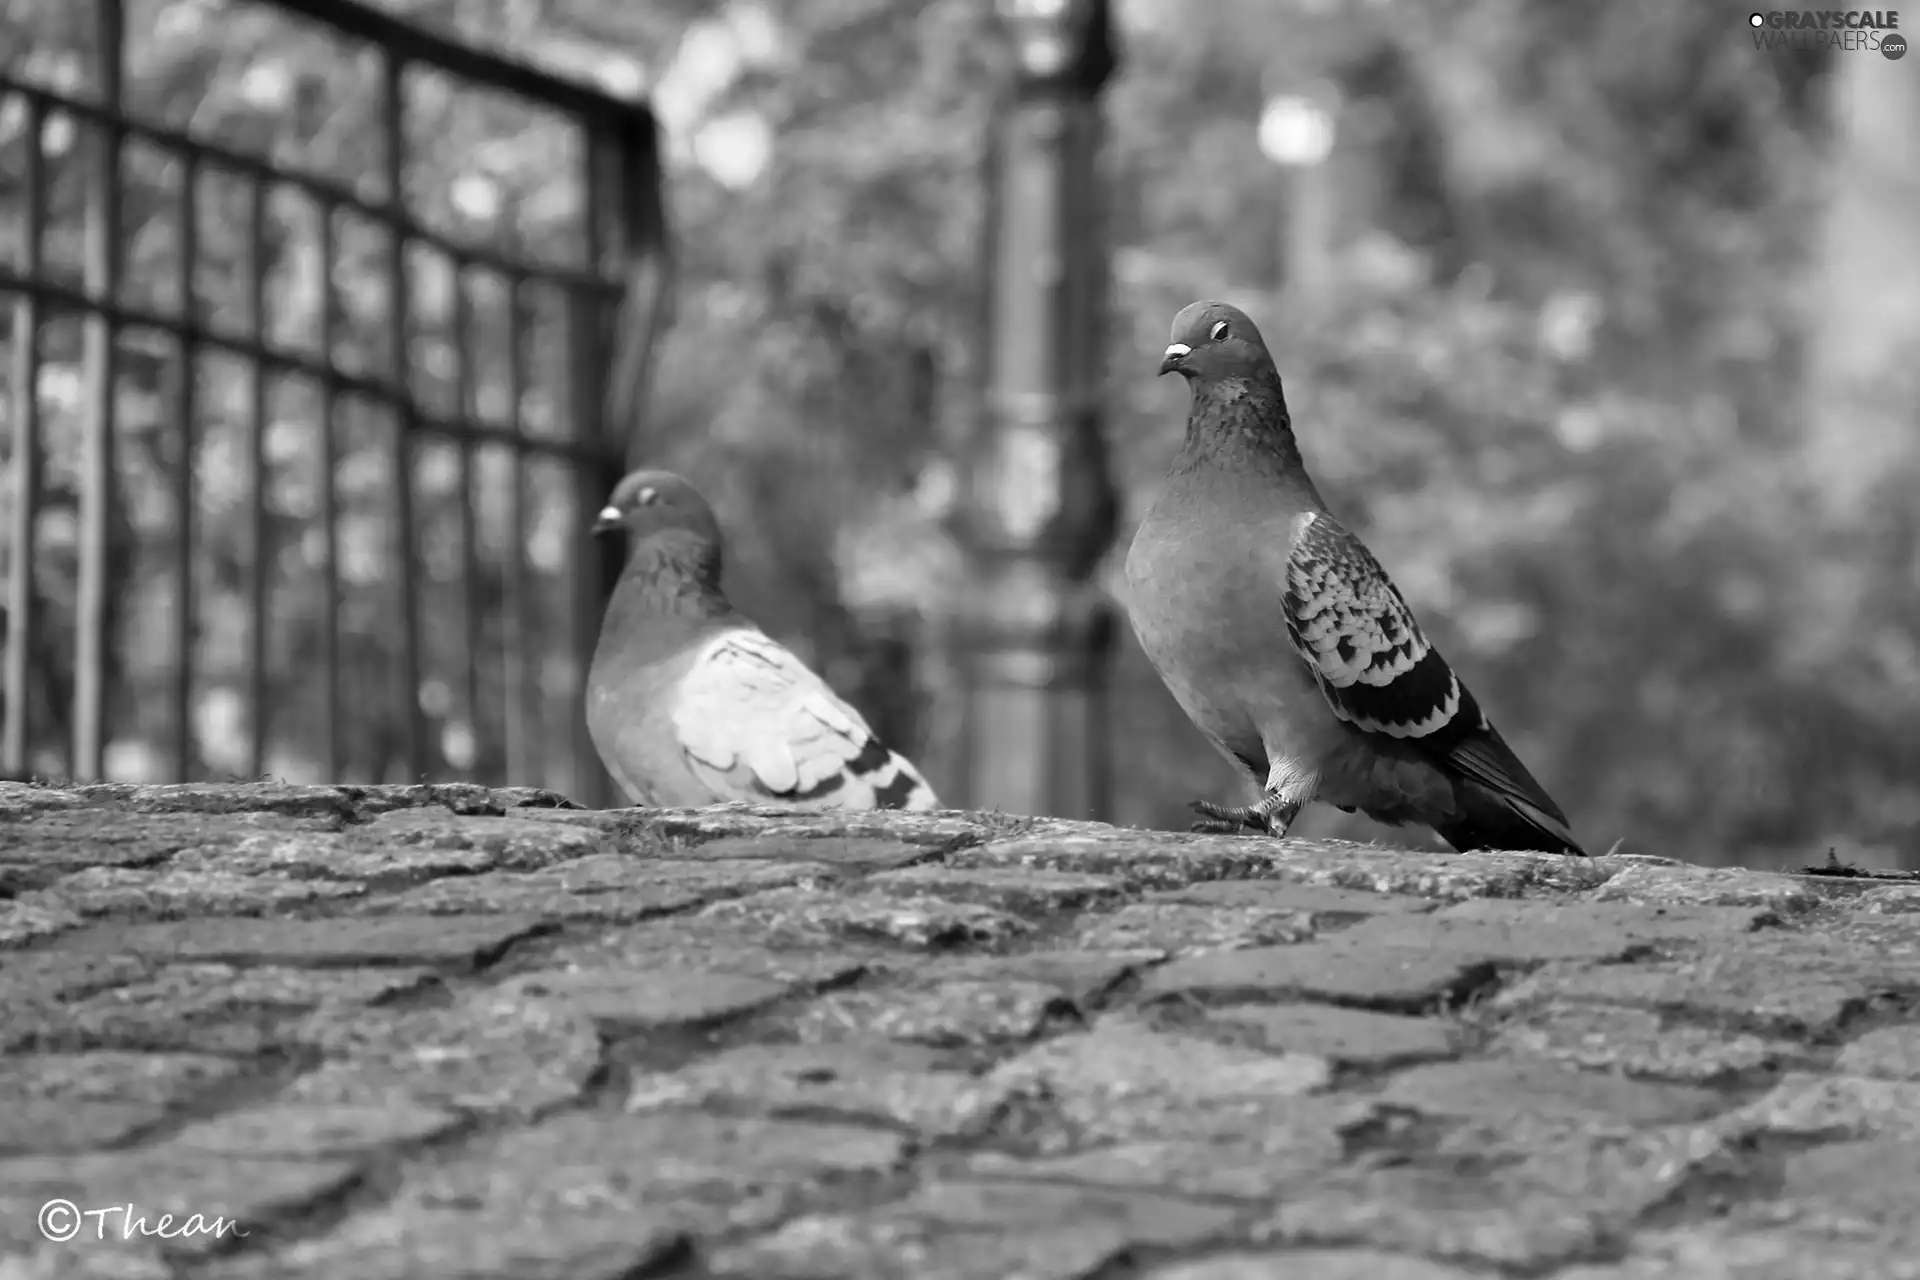 pigeon, brick, paving, Bird